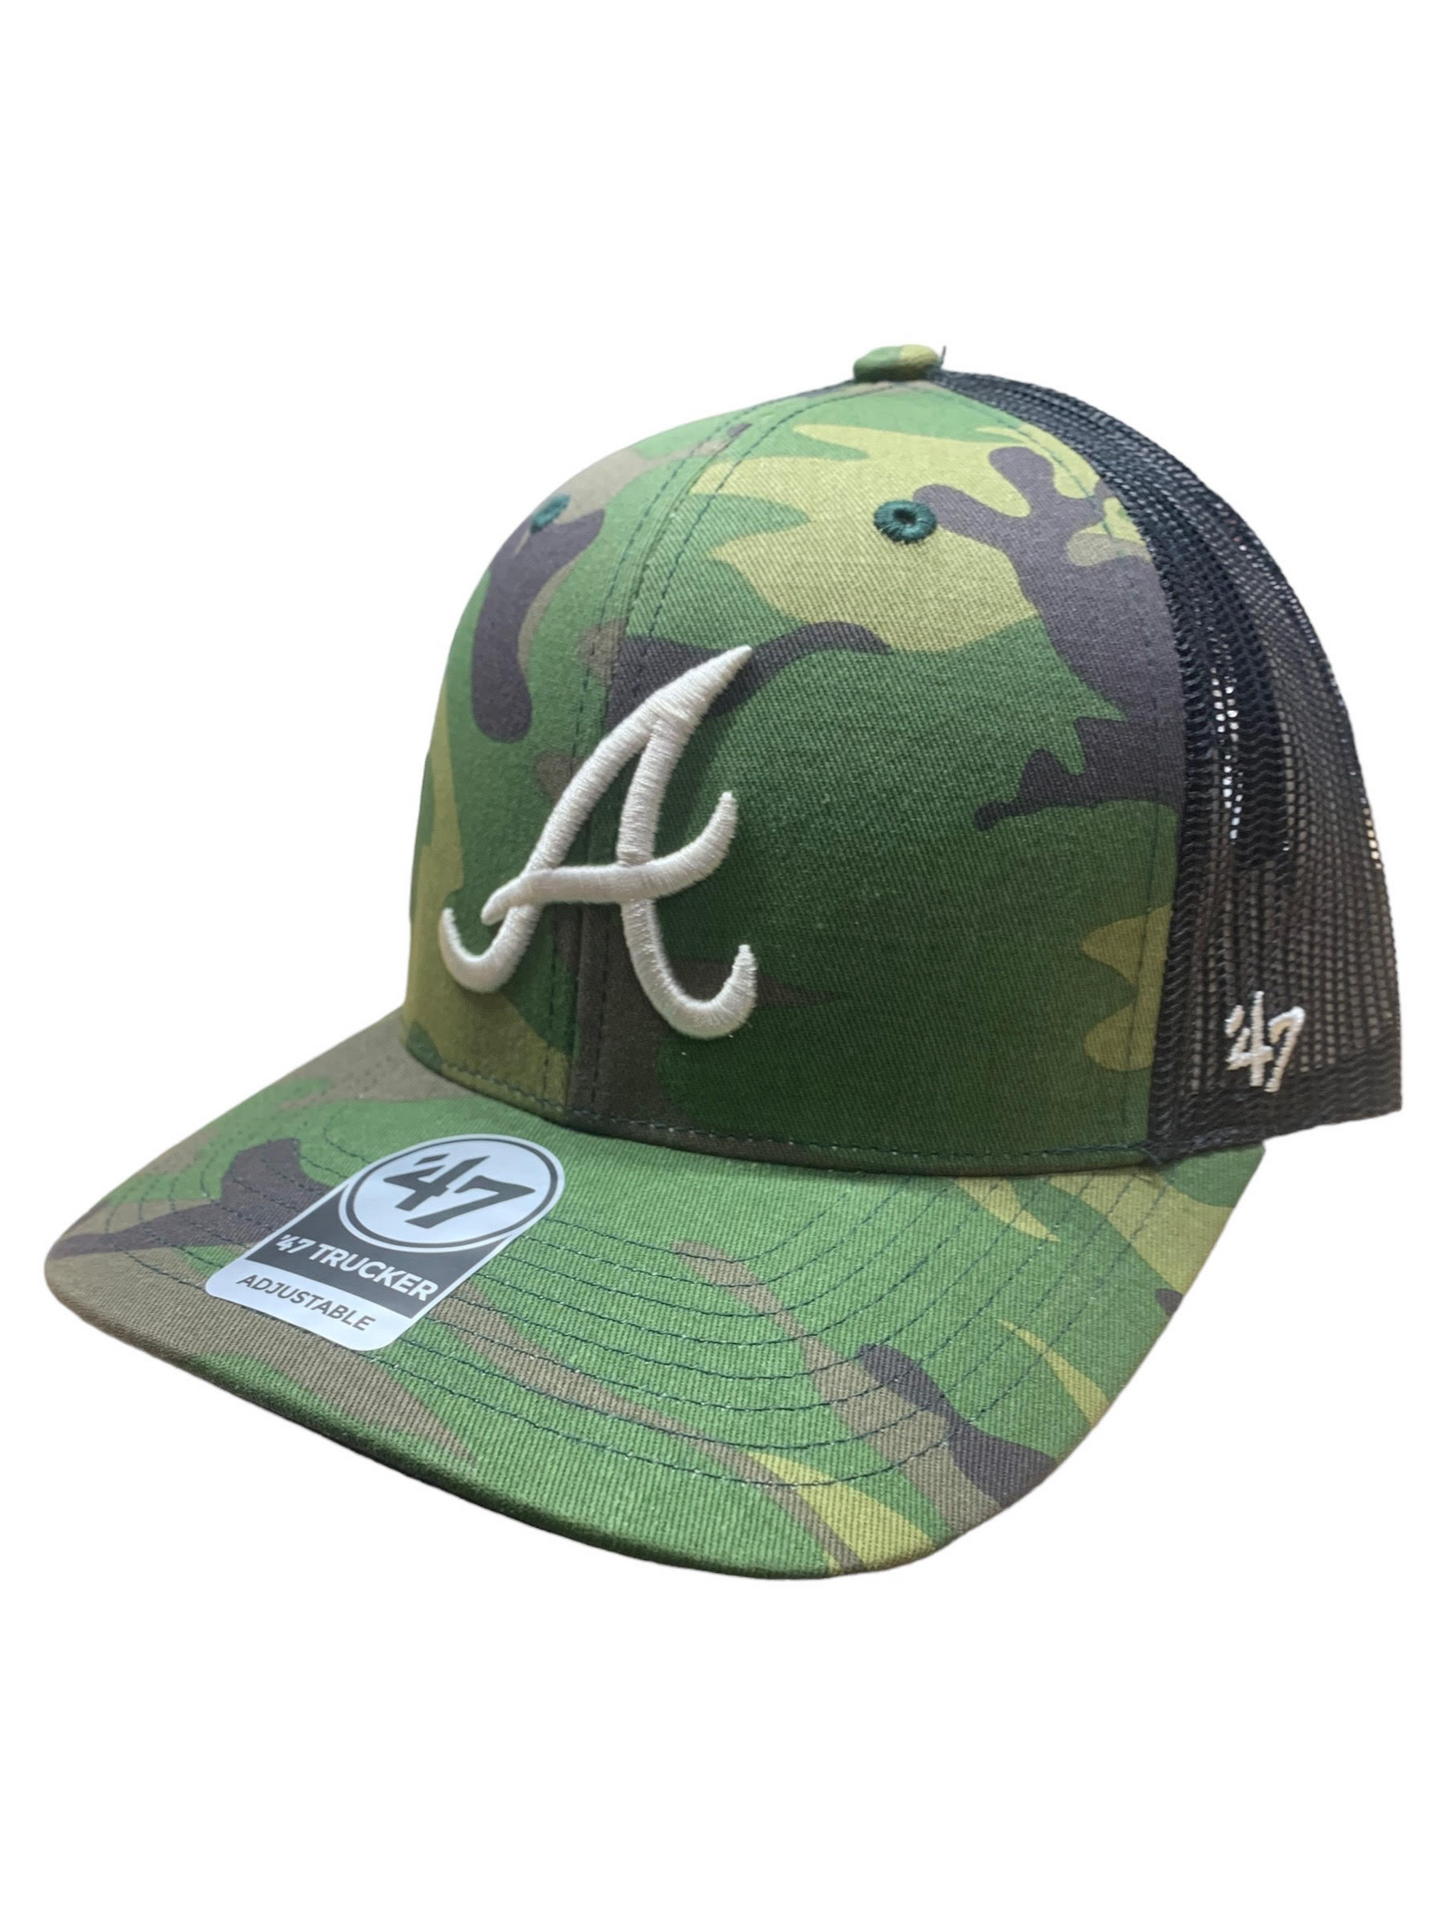 Atlanta Braves camo hat, this hat is basically brand